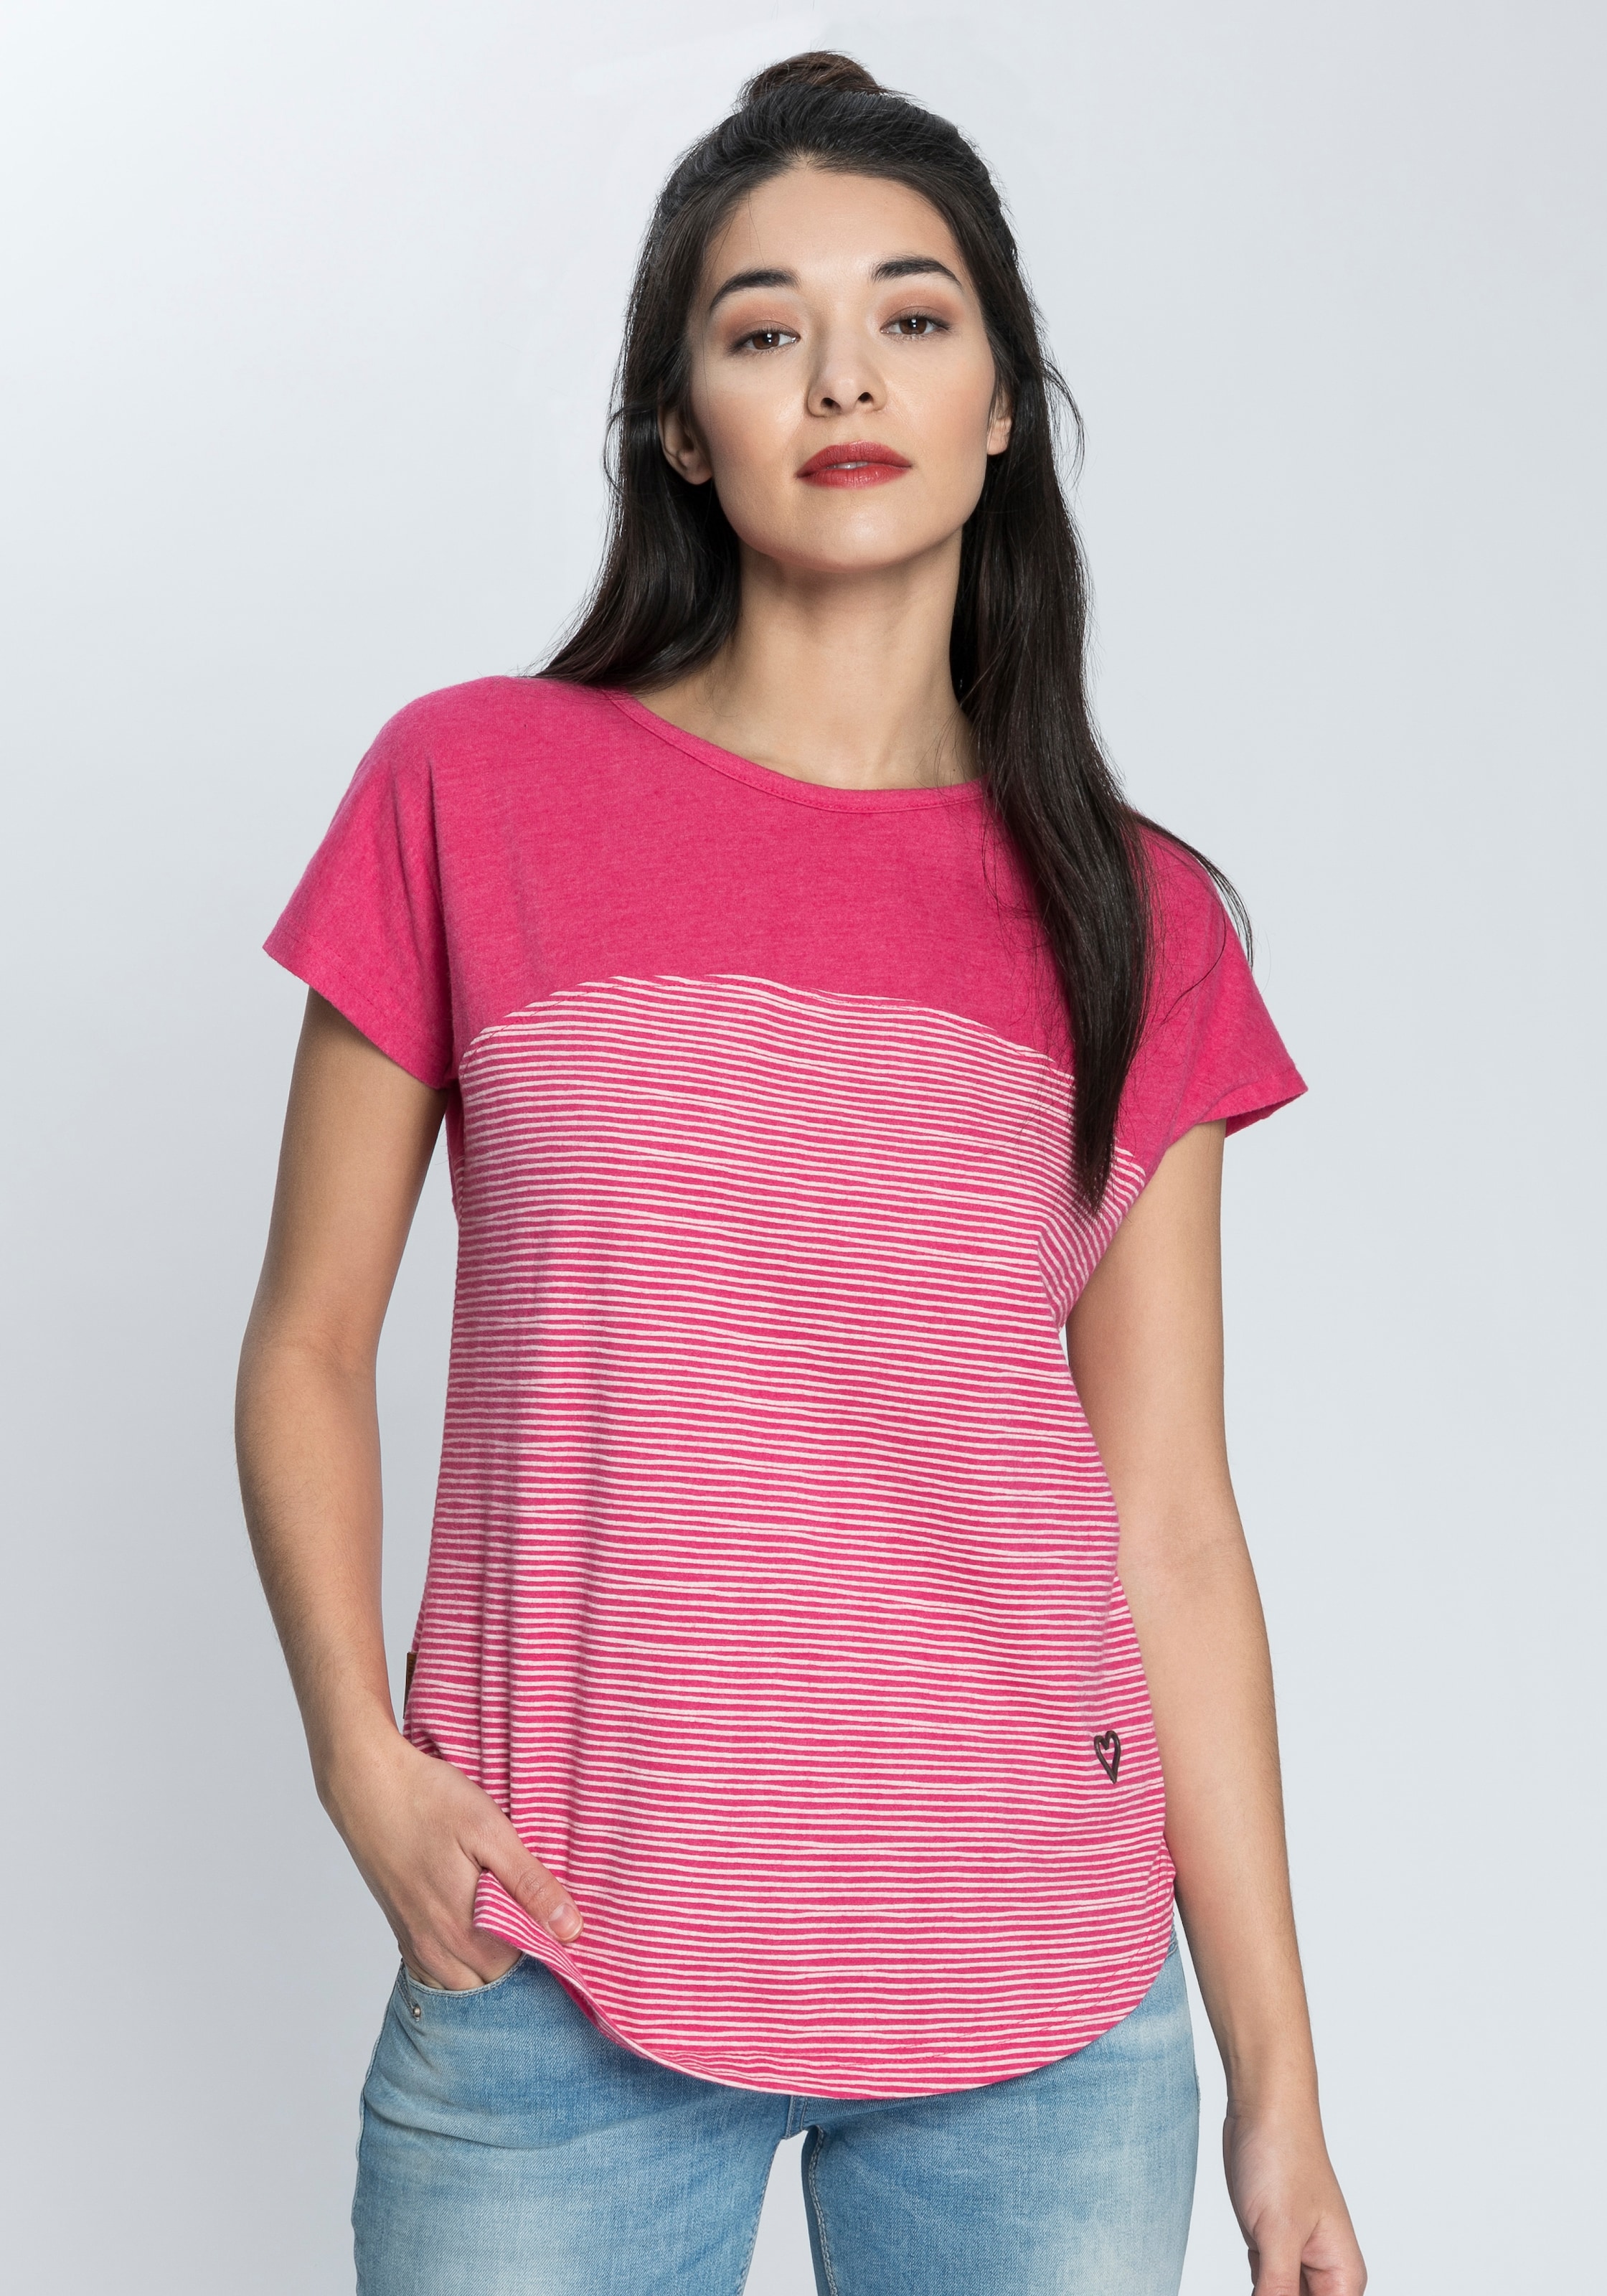 T-Shirt, trendy Longshirt mit Streifen-oder Musterprints